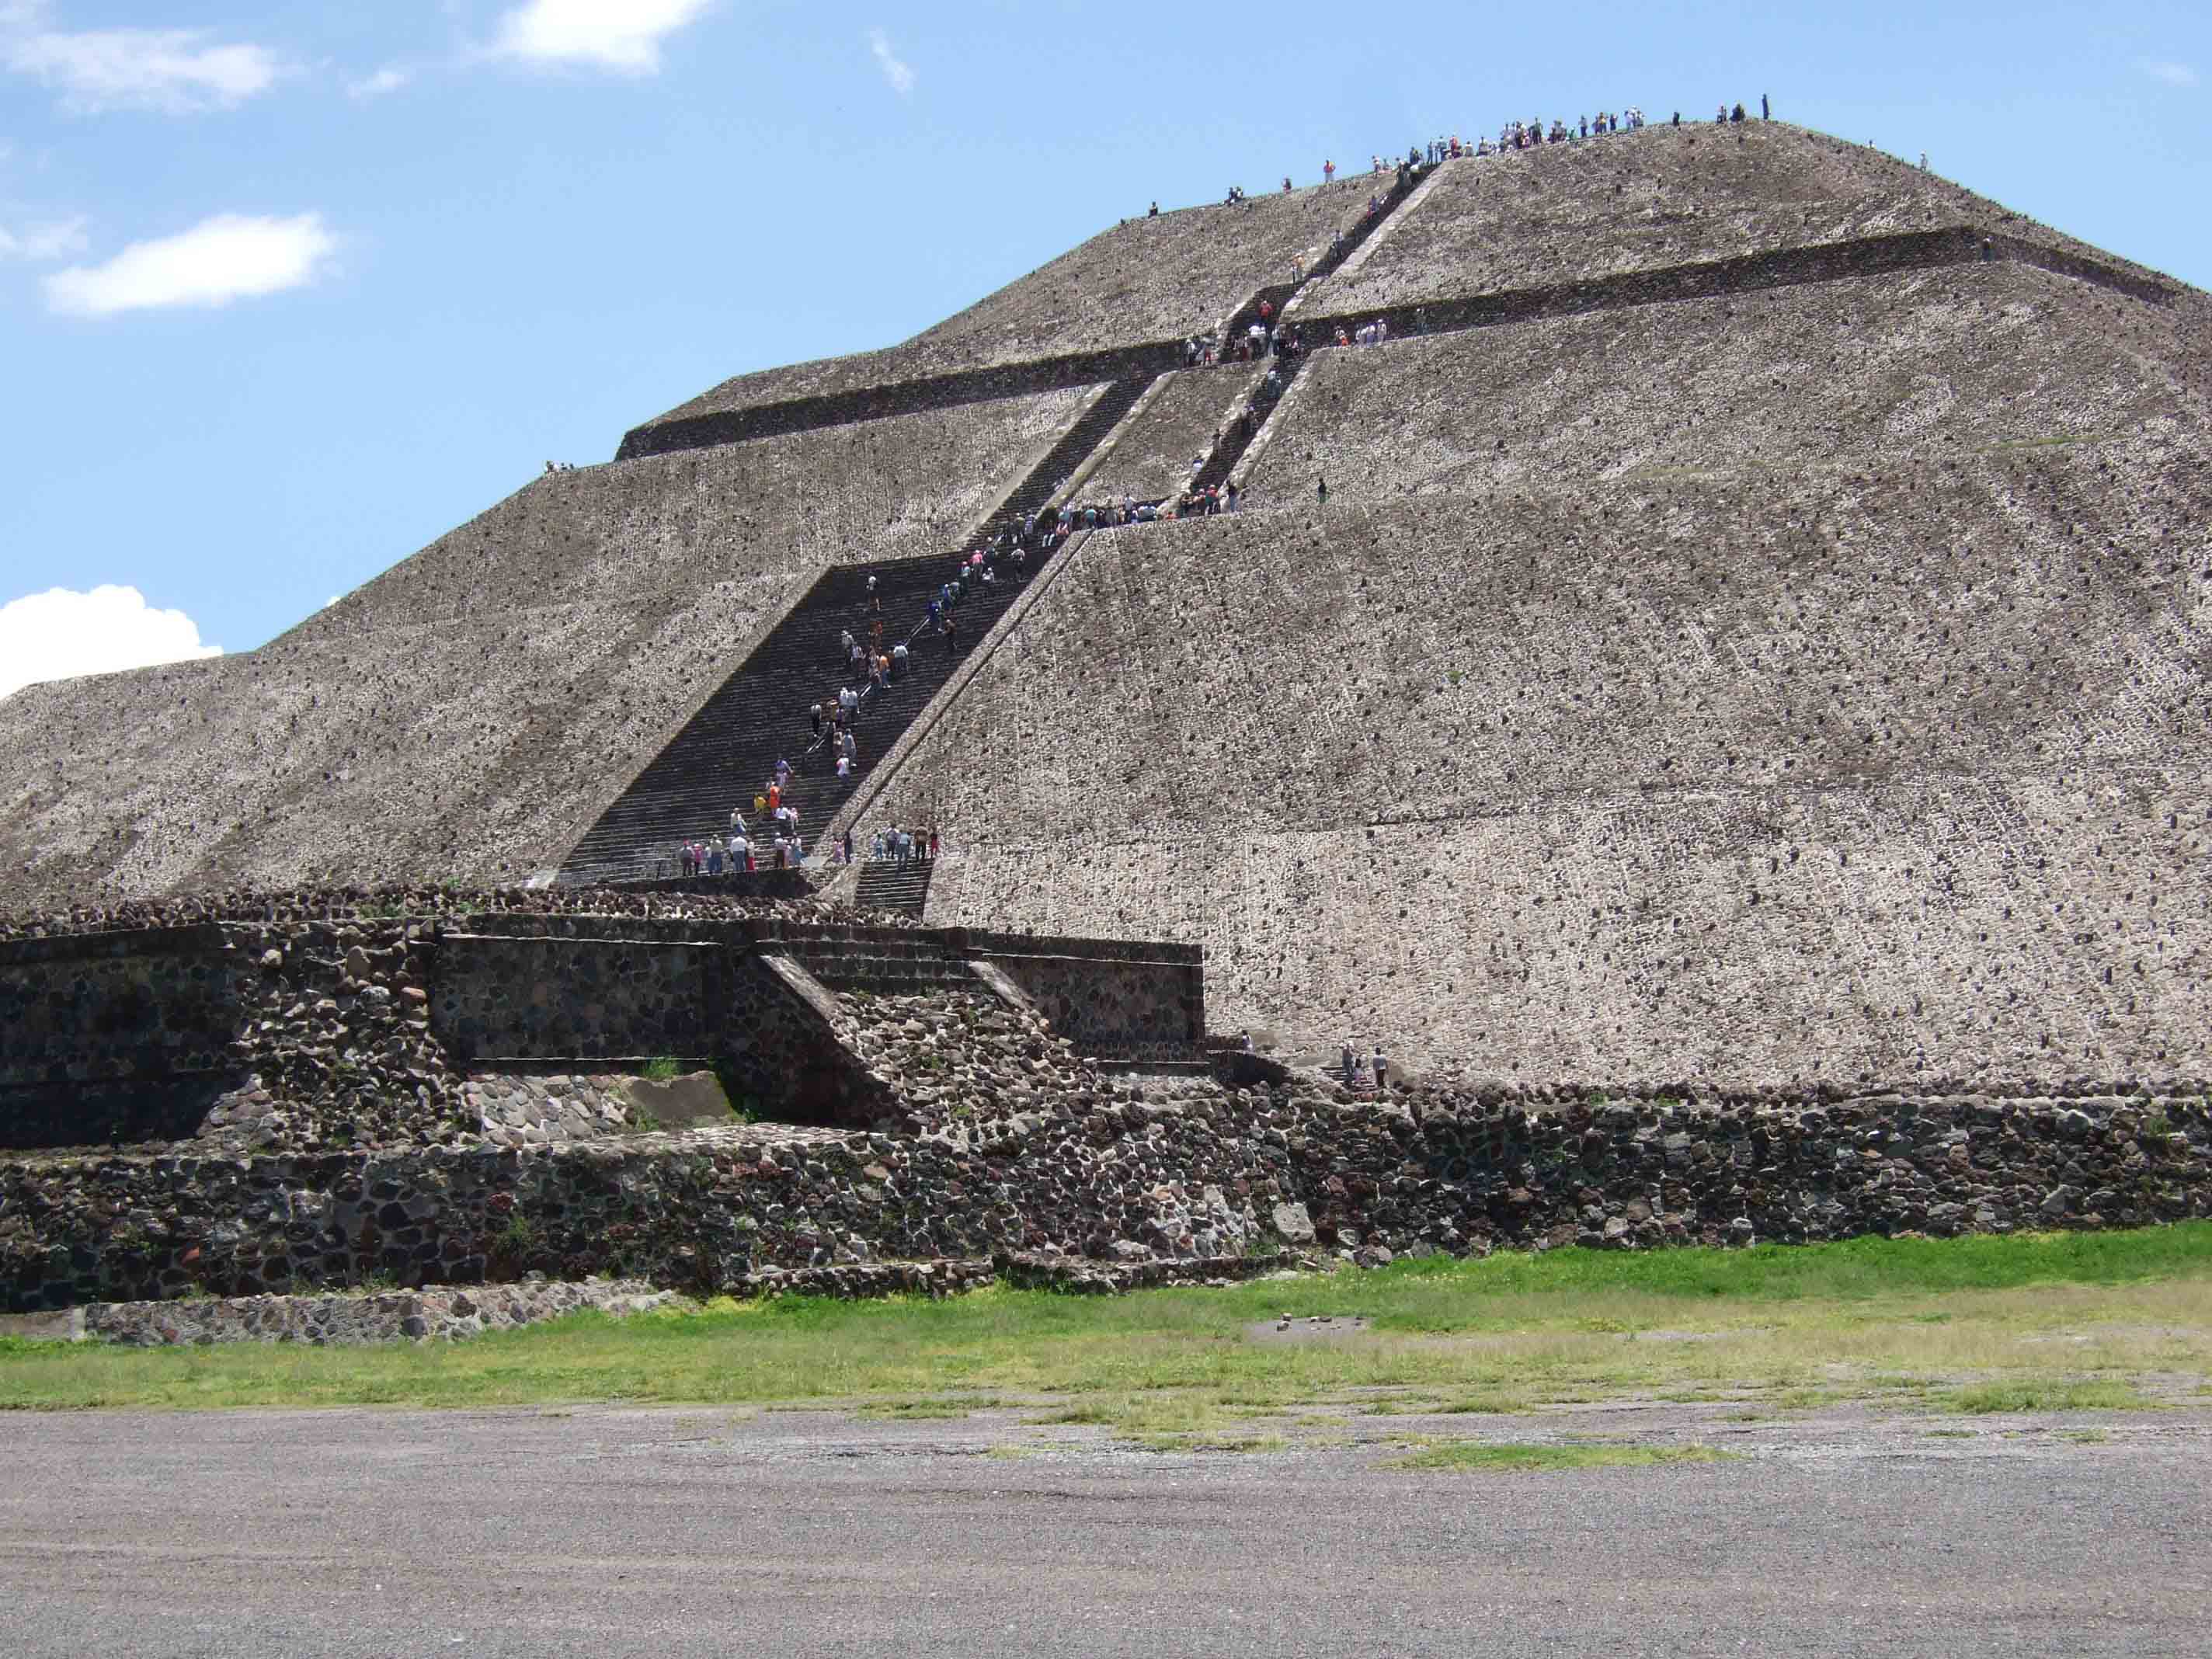 Meksyk - Teotihuacan